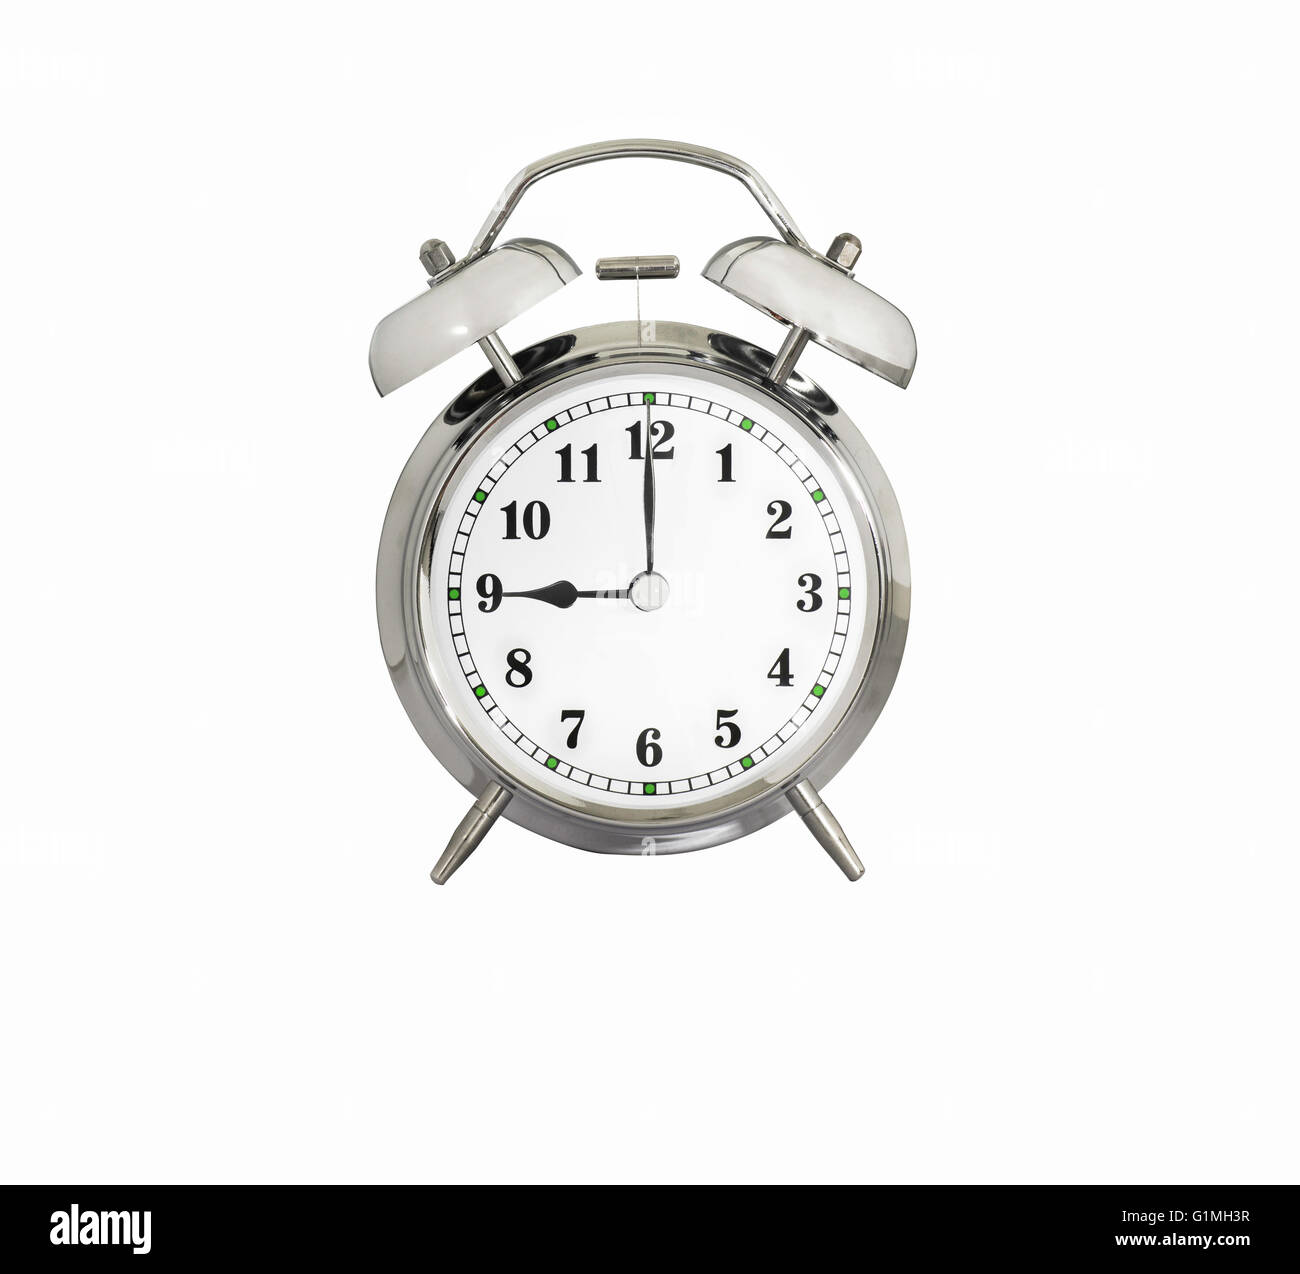 Despertador tradicional Mostrando 9:00 Fotografía de stock - Alamy